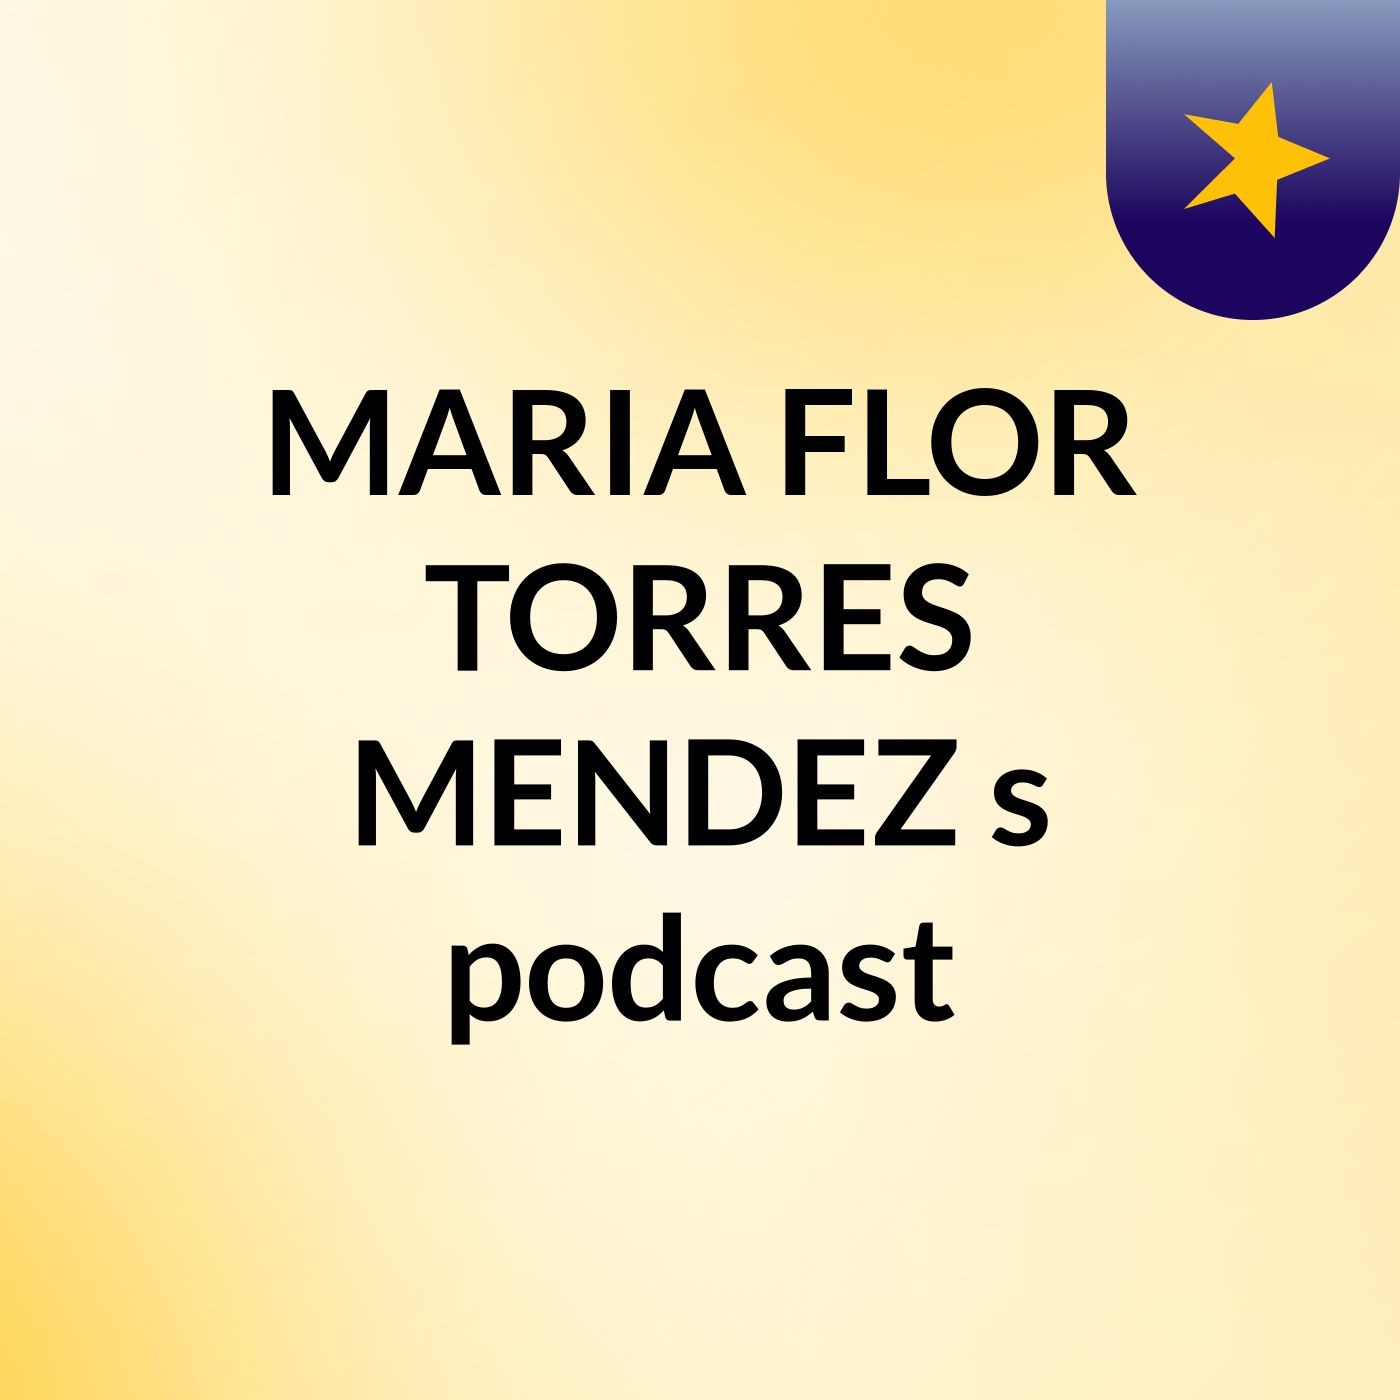 MARIA FLOR TORRES MENDEZ's podcast